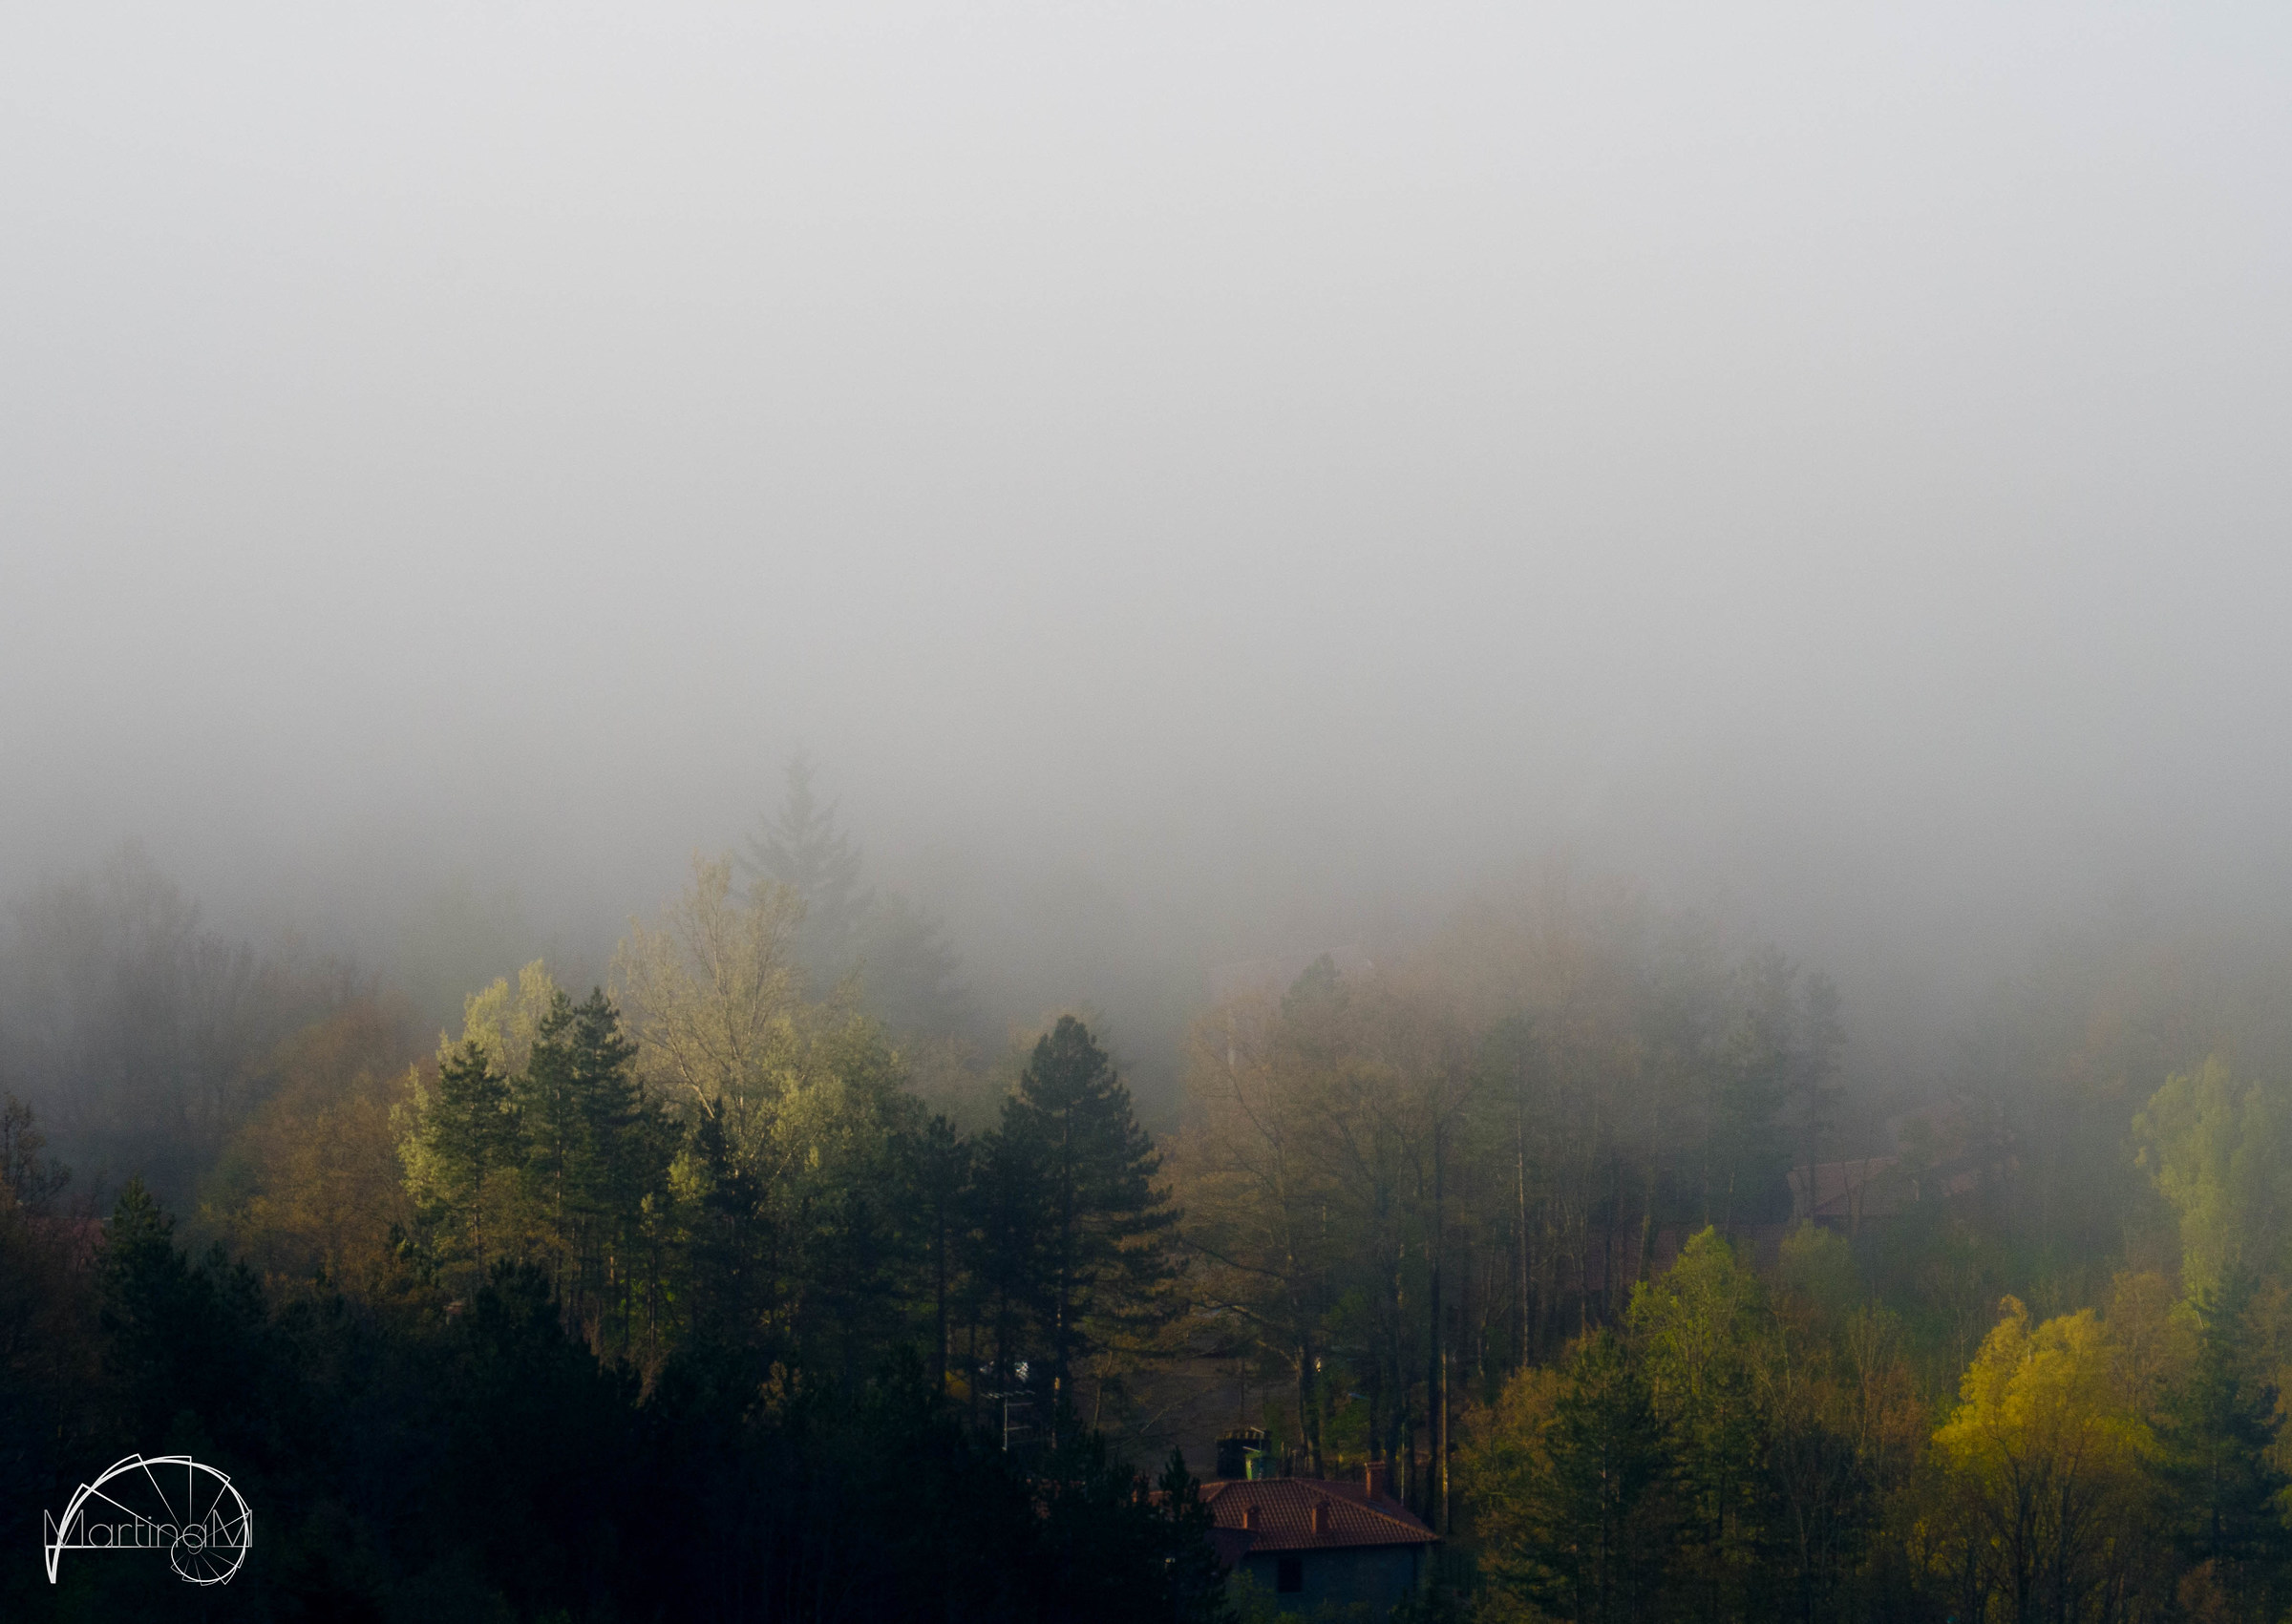 The morning mist...